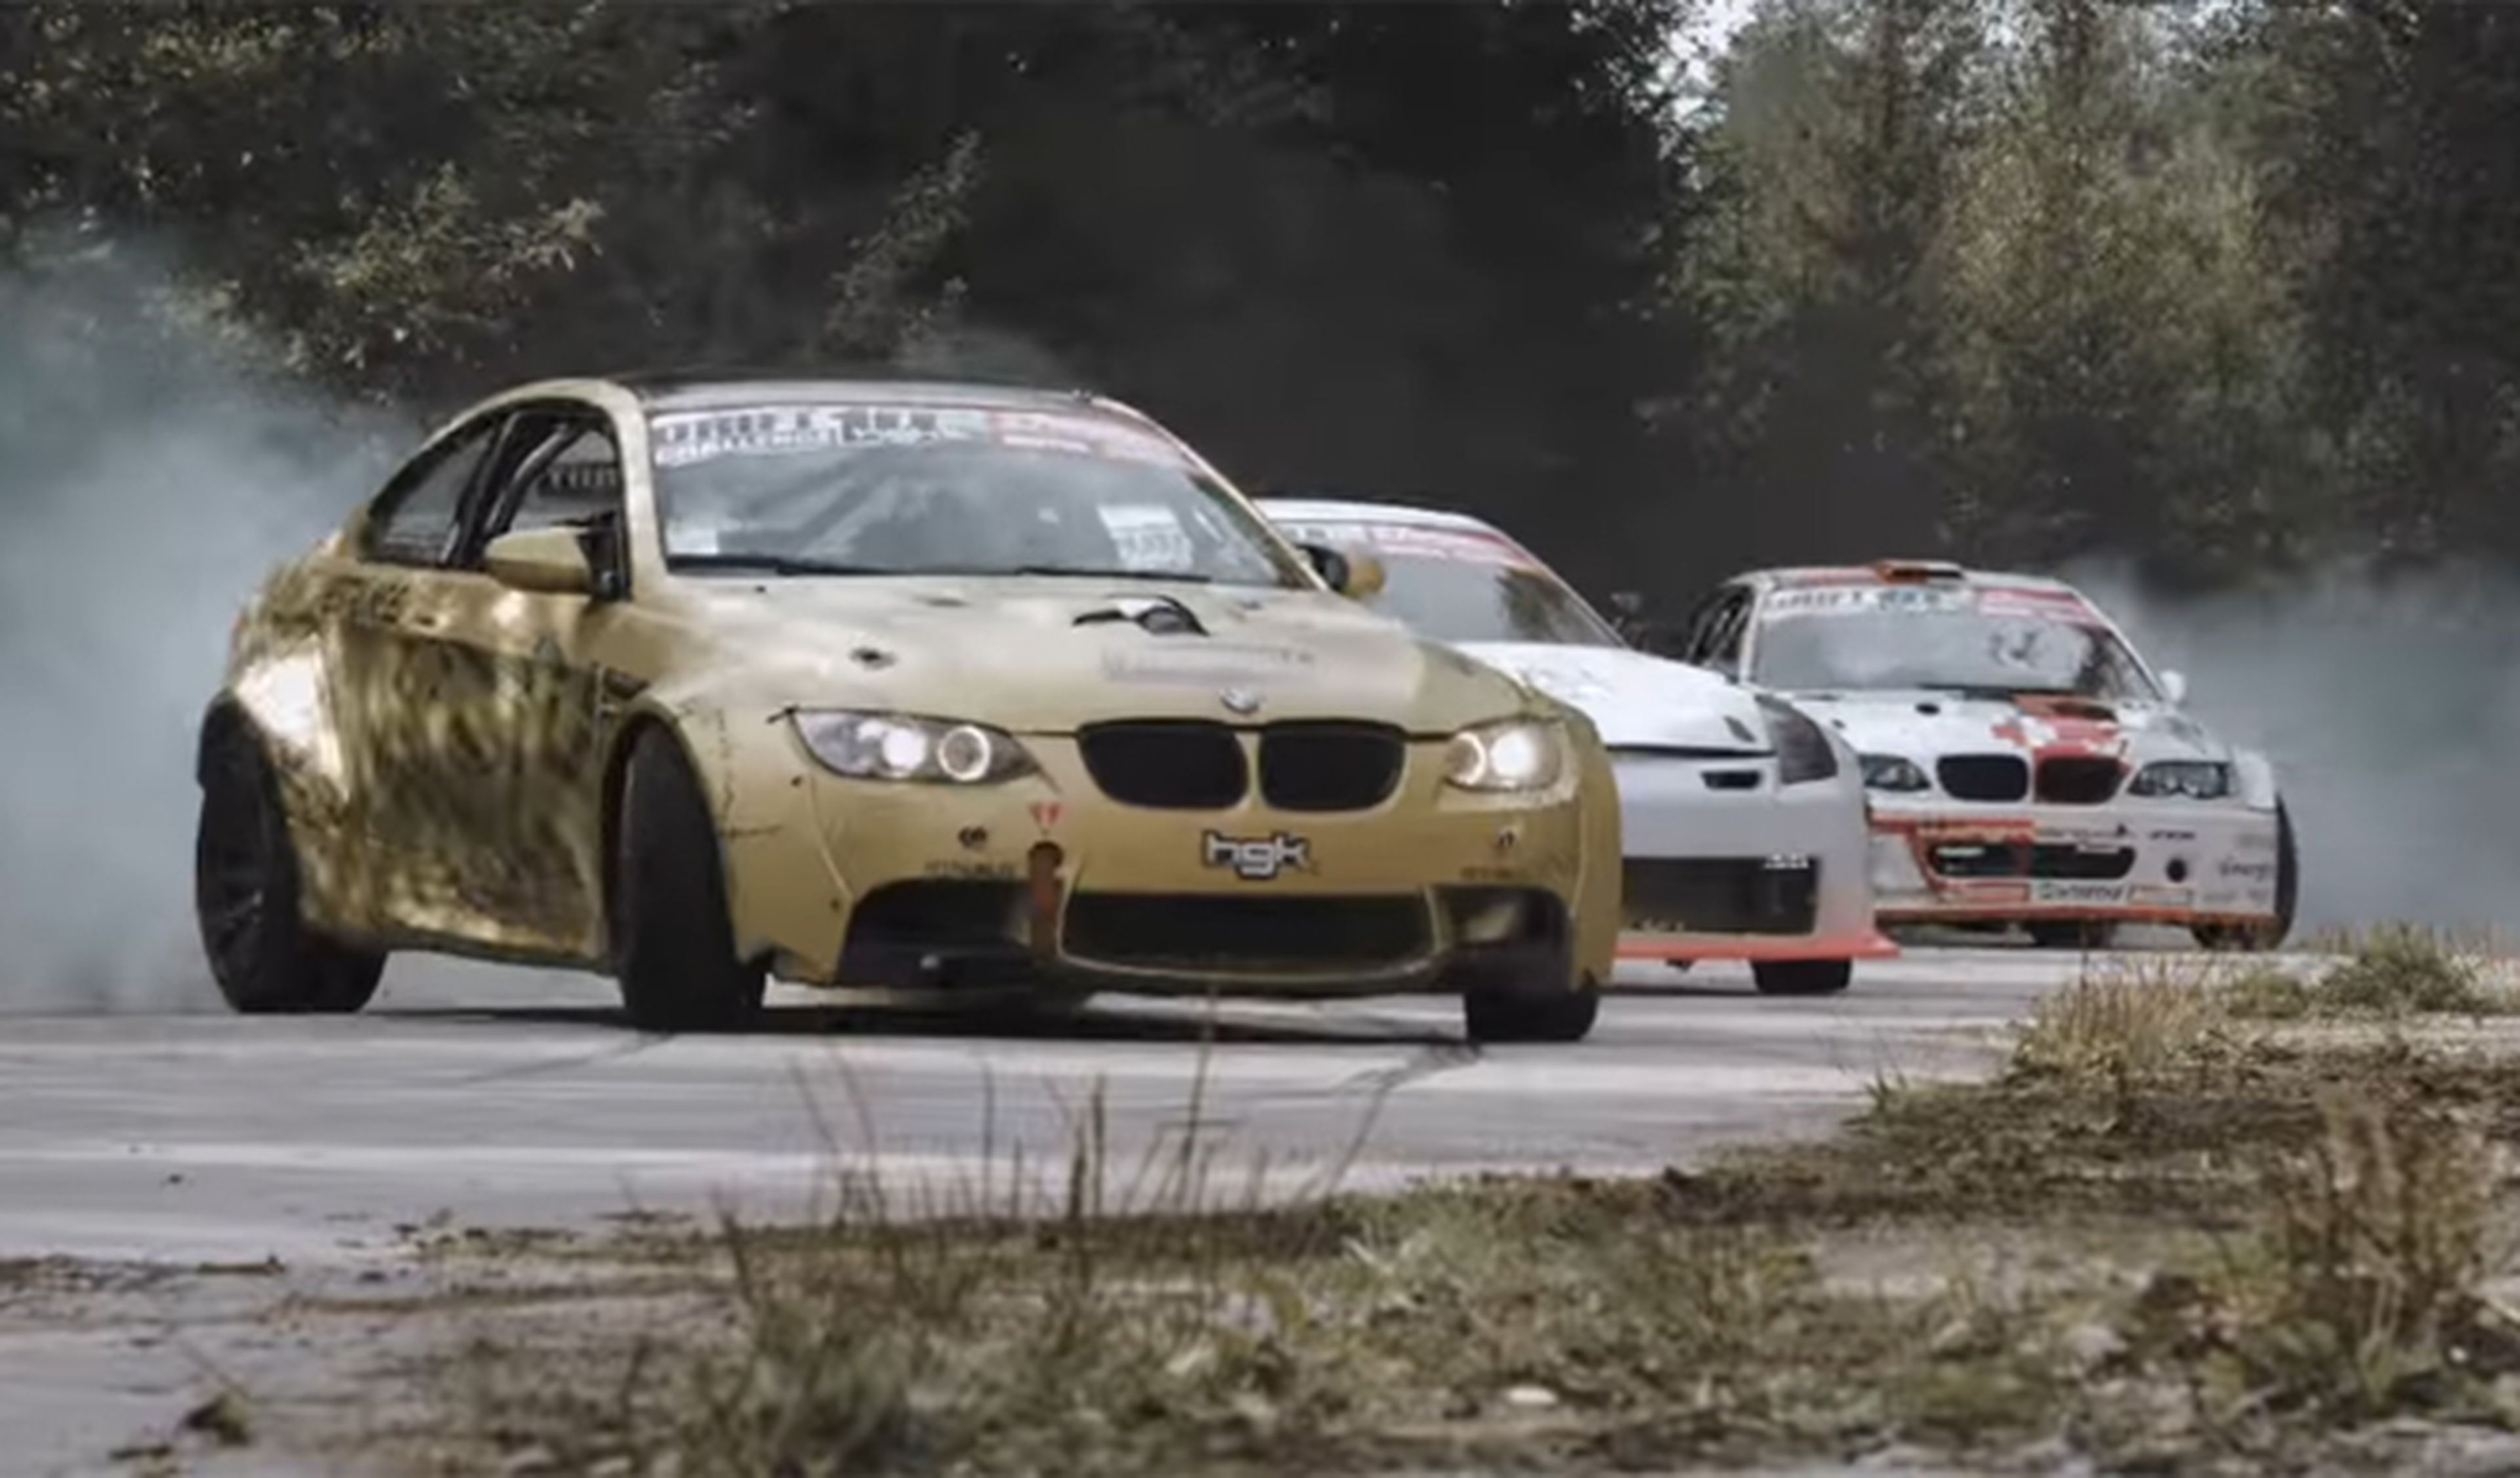 Batalla de drift: dos BMW M3 y un Nissan 350Z